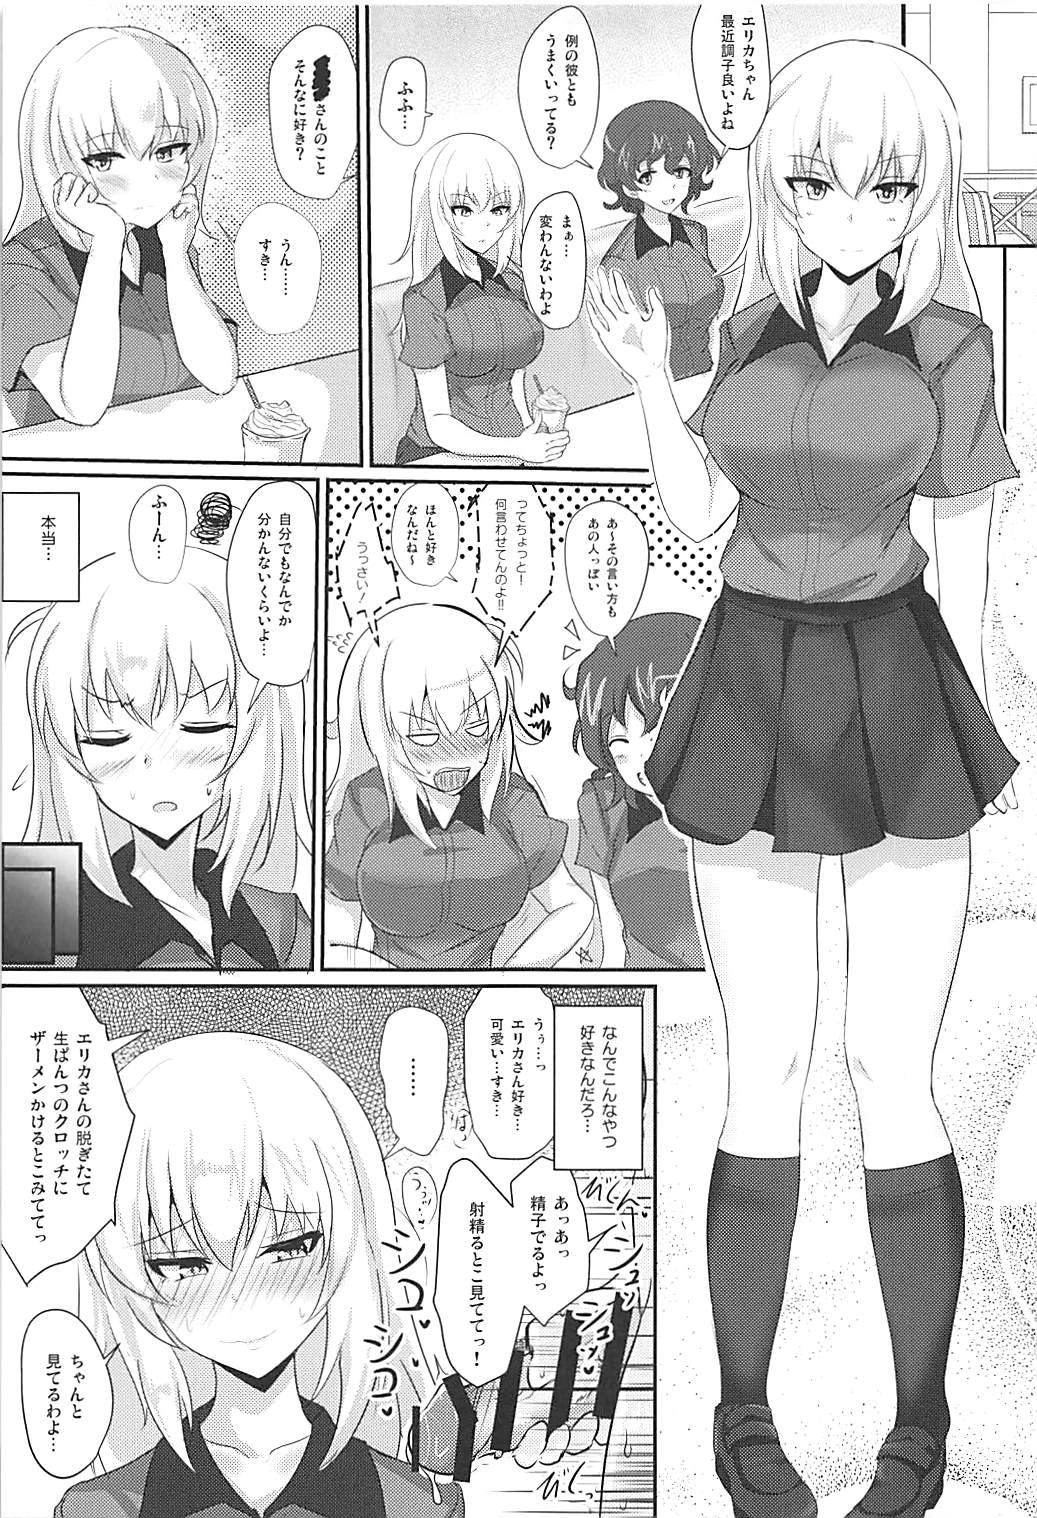 Humiliation Pov Onayami Itsumi-san 2 - Girls und panzer Tribbing - Page 3